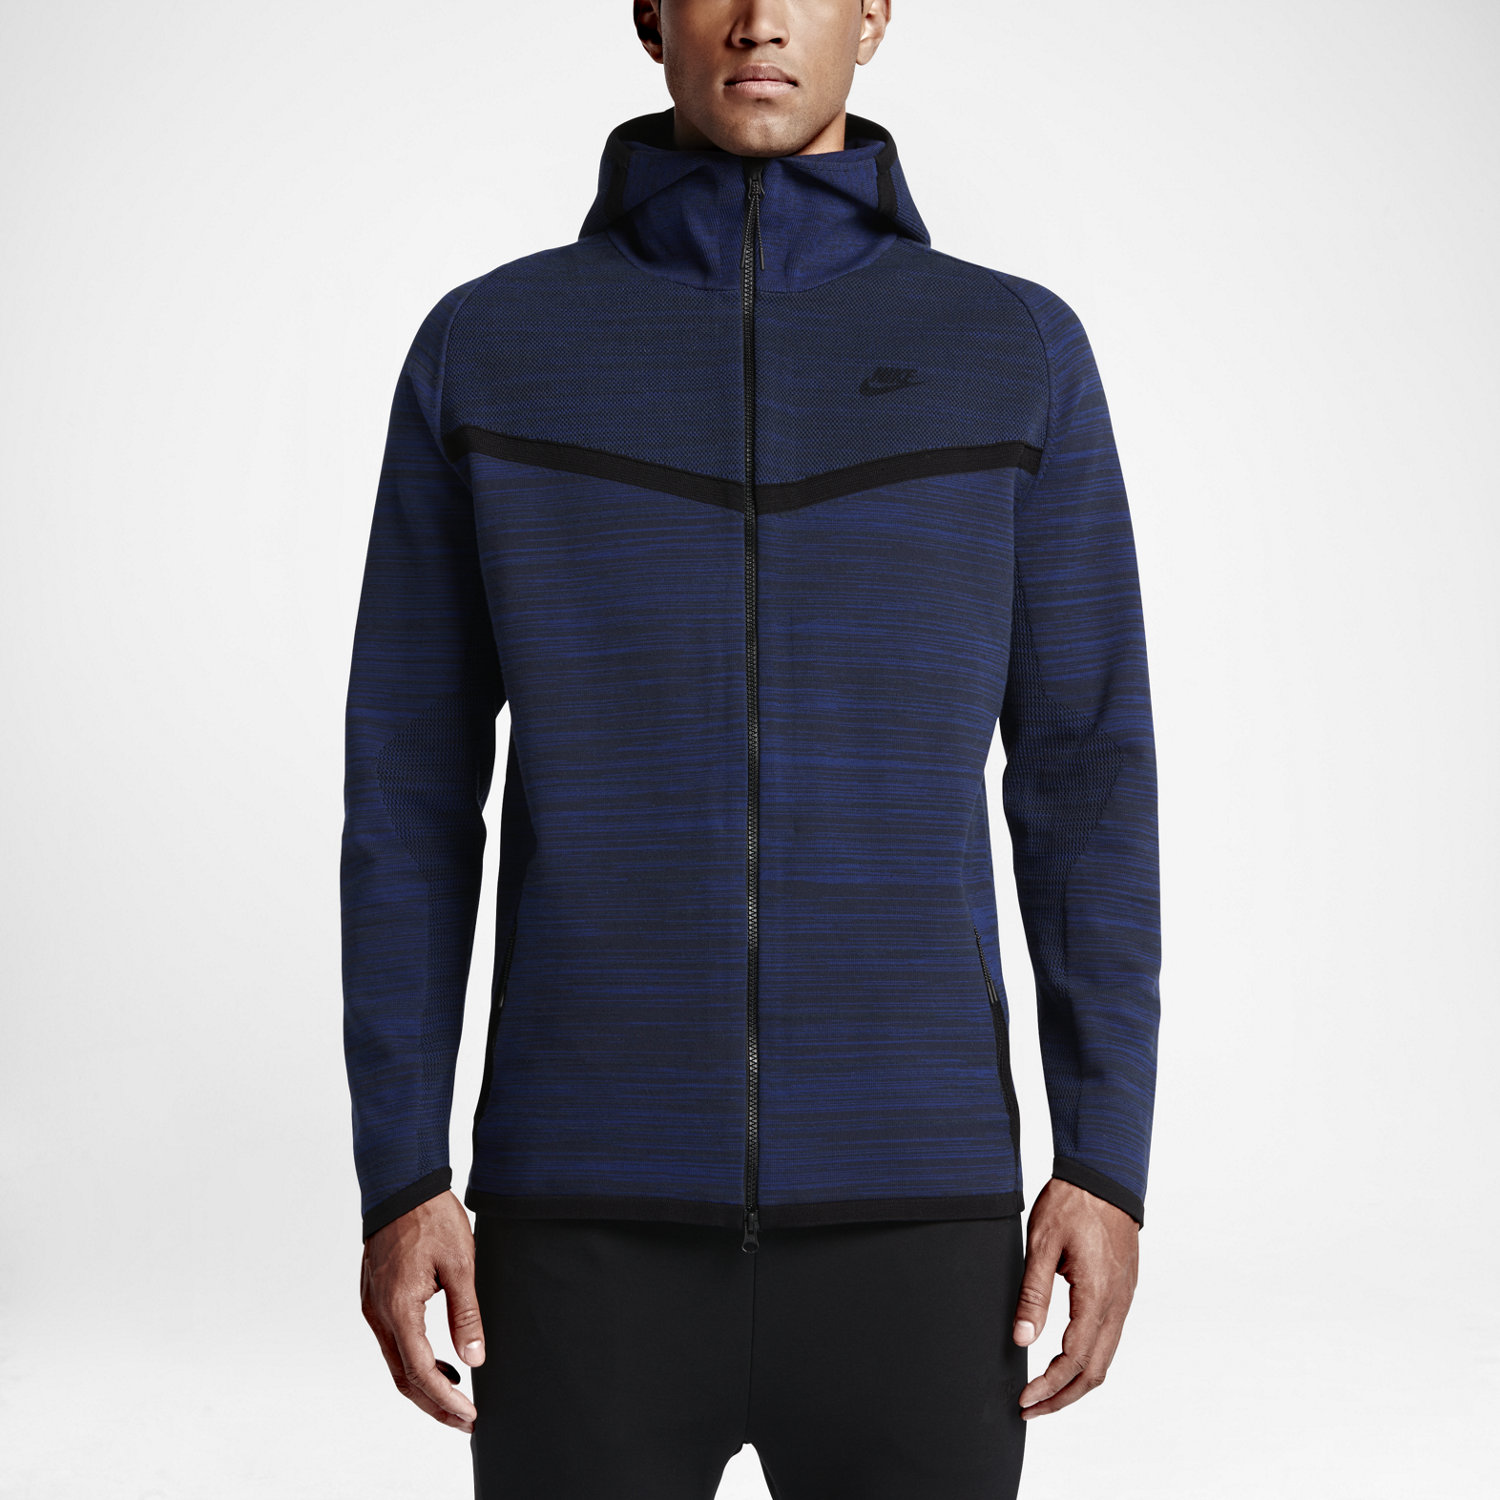 Nike Tech Knit Windrunner - Men's Jacket